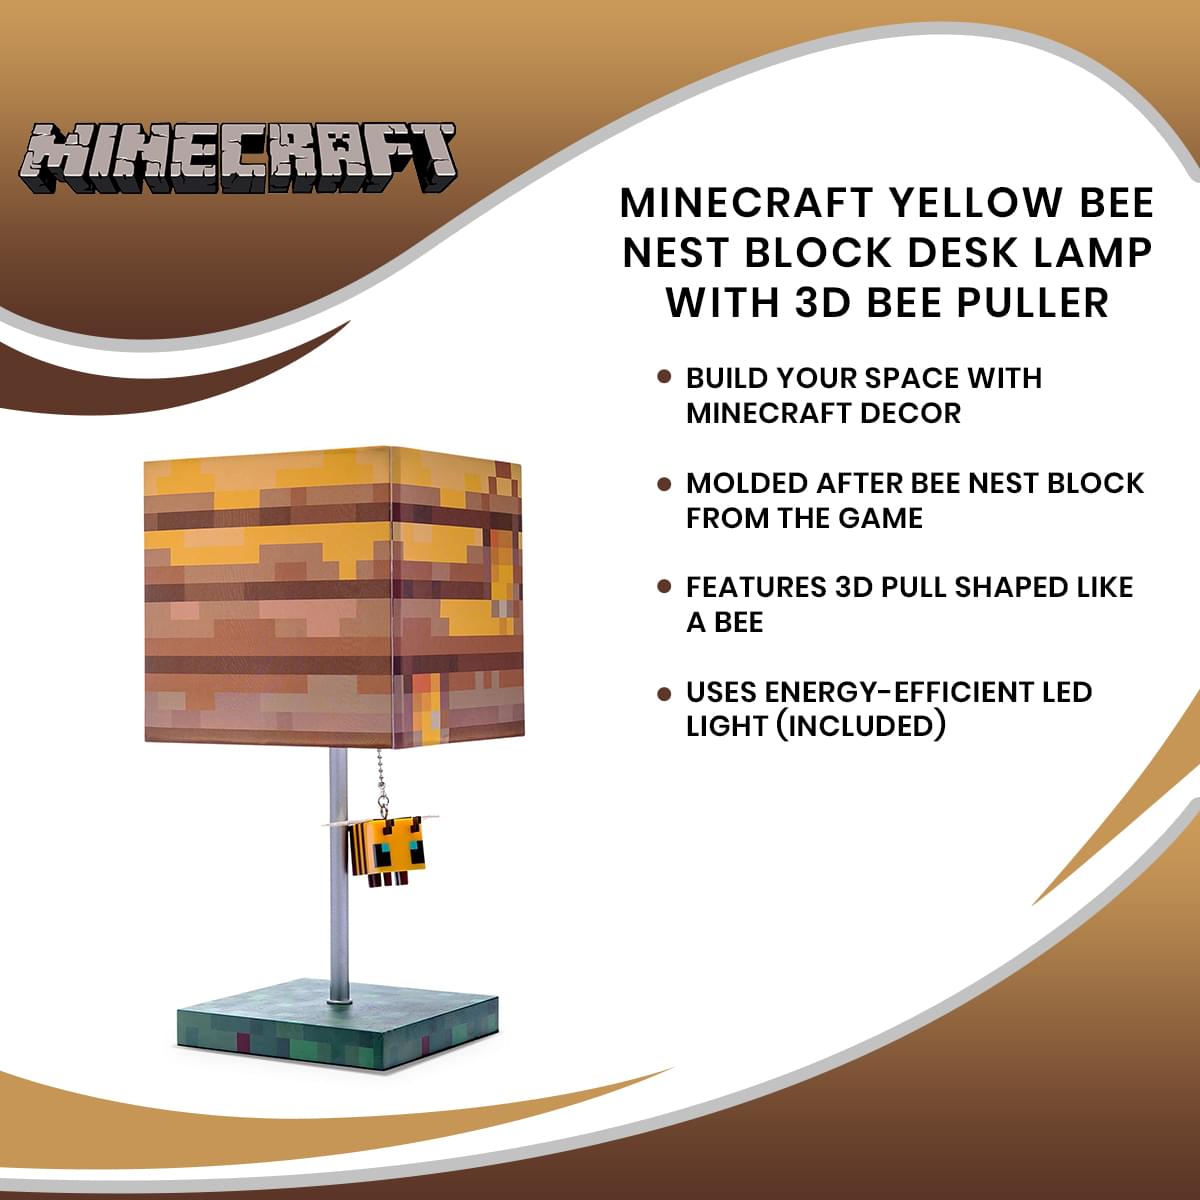 Minecraft Yellow Bee Nest Block Desk Lamp with 3D Bee Puller